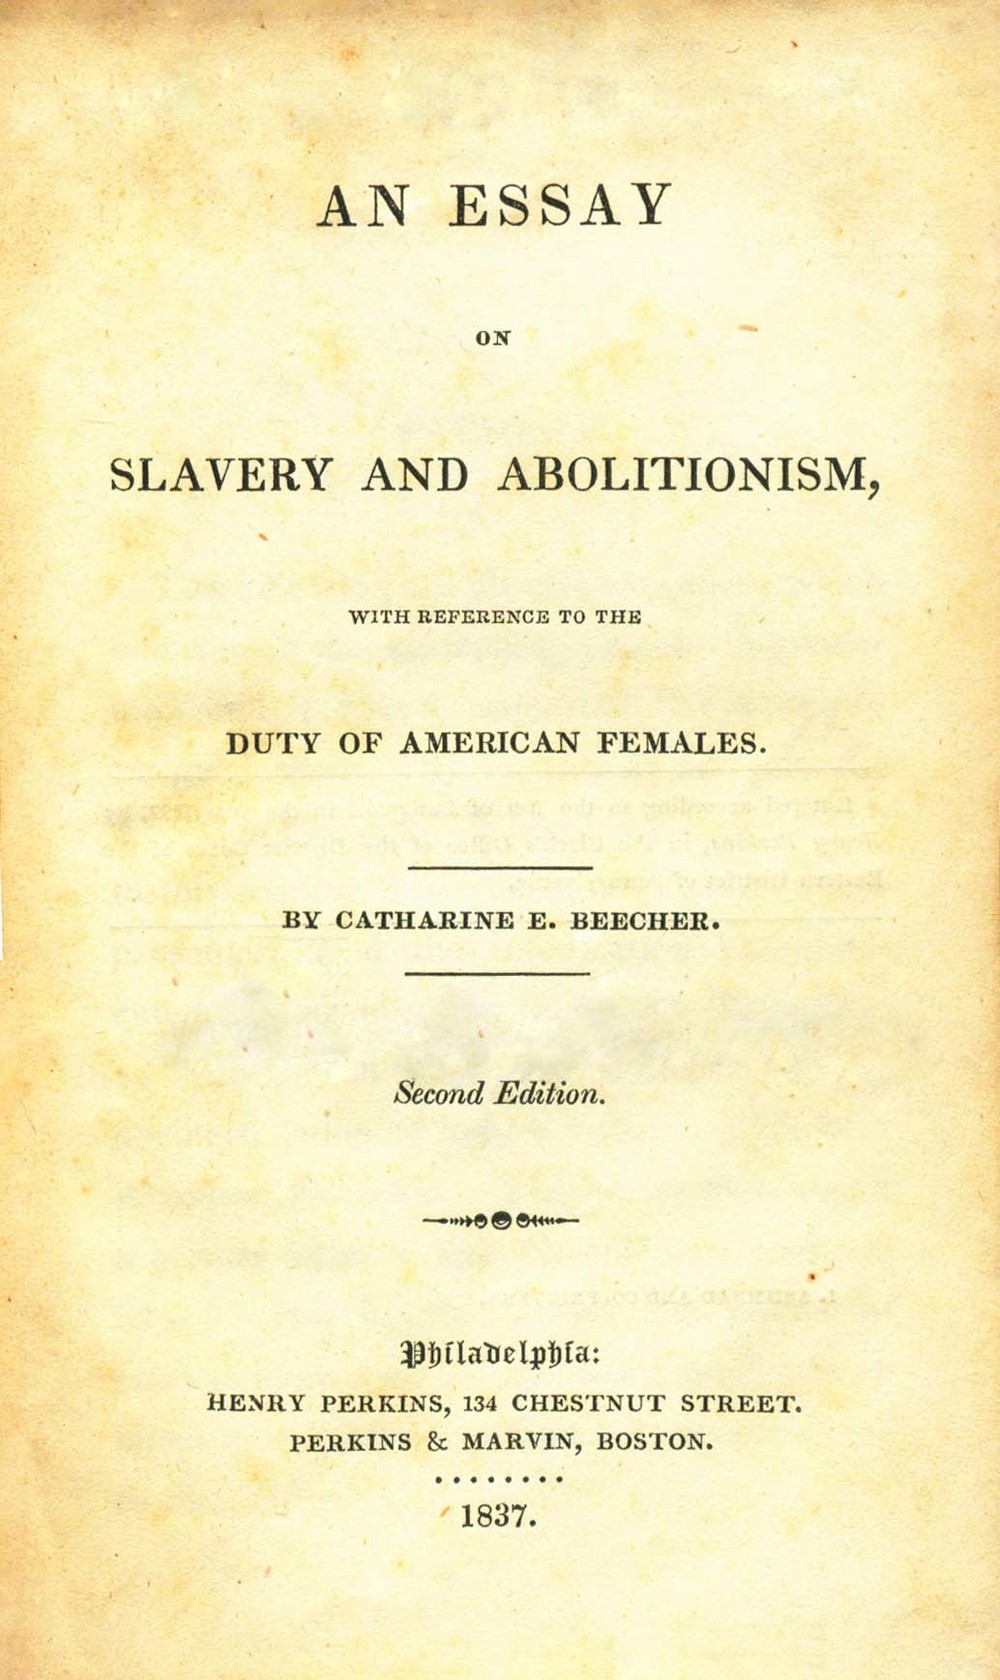 why should slavery be abolished speech